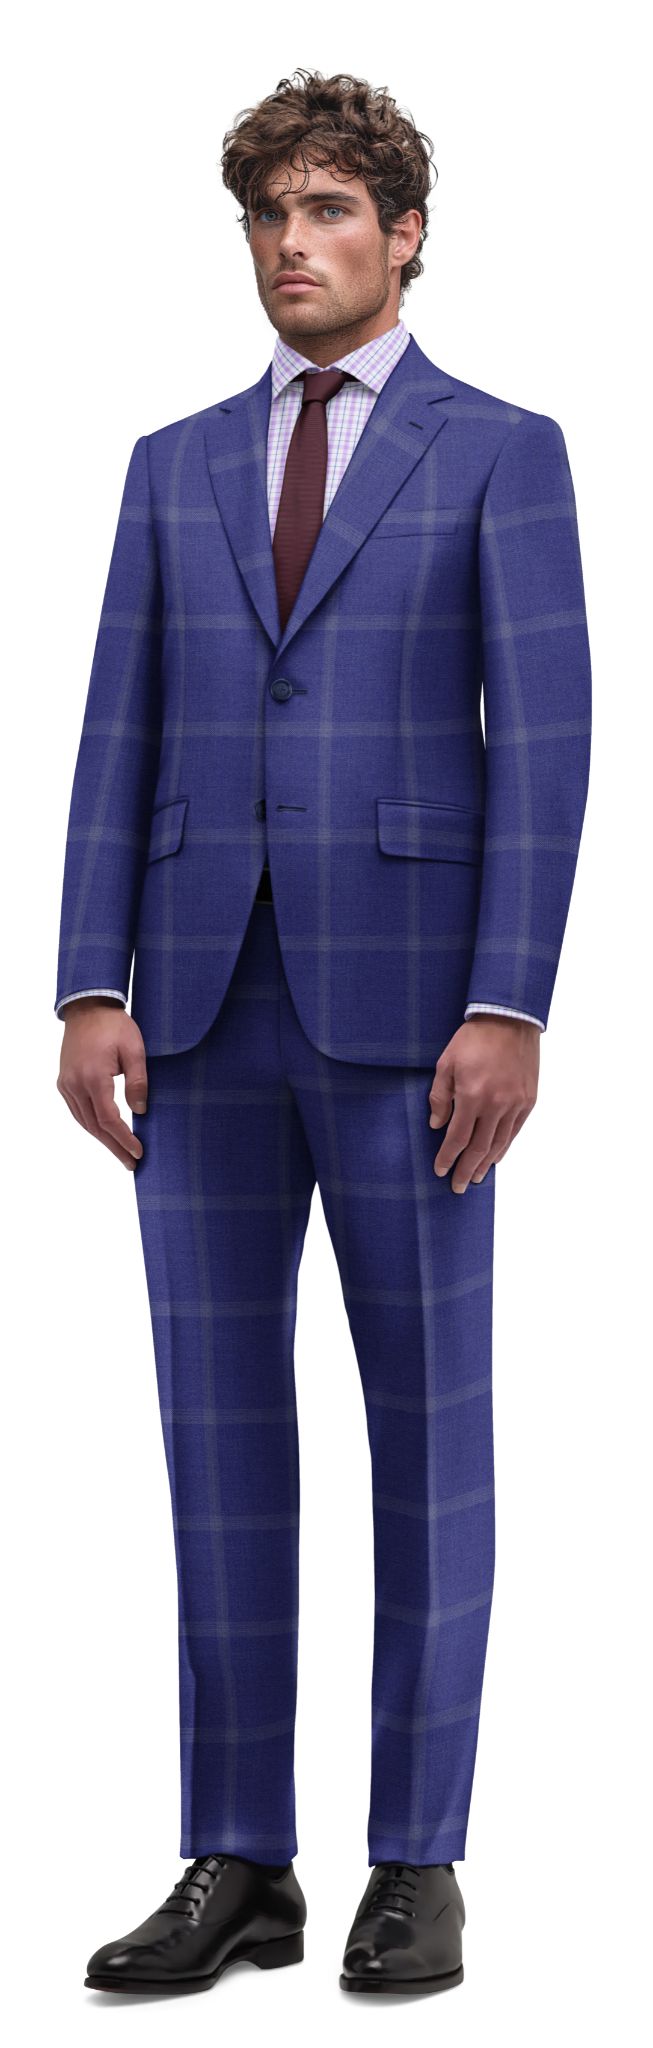 professional-psd-suit-mockup.jpg